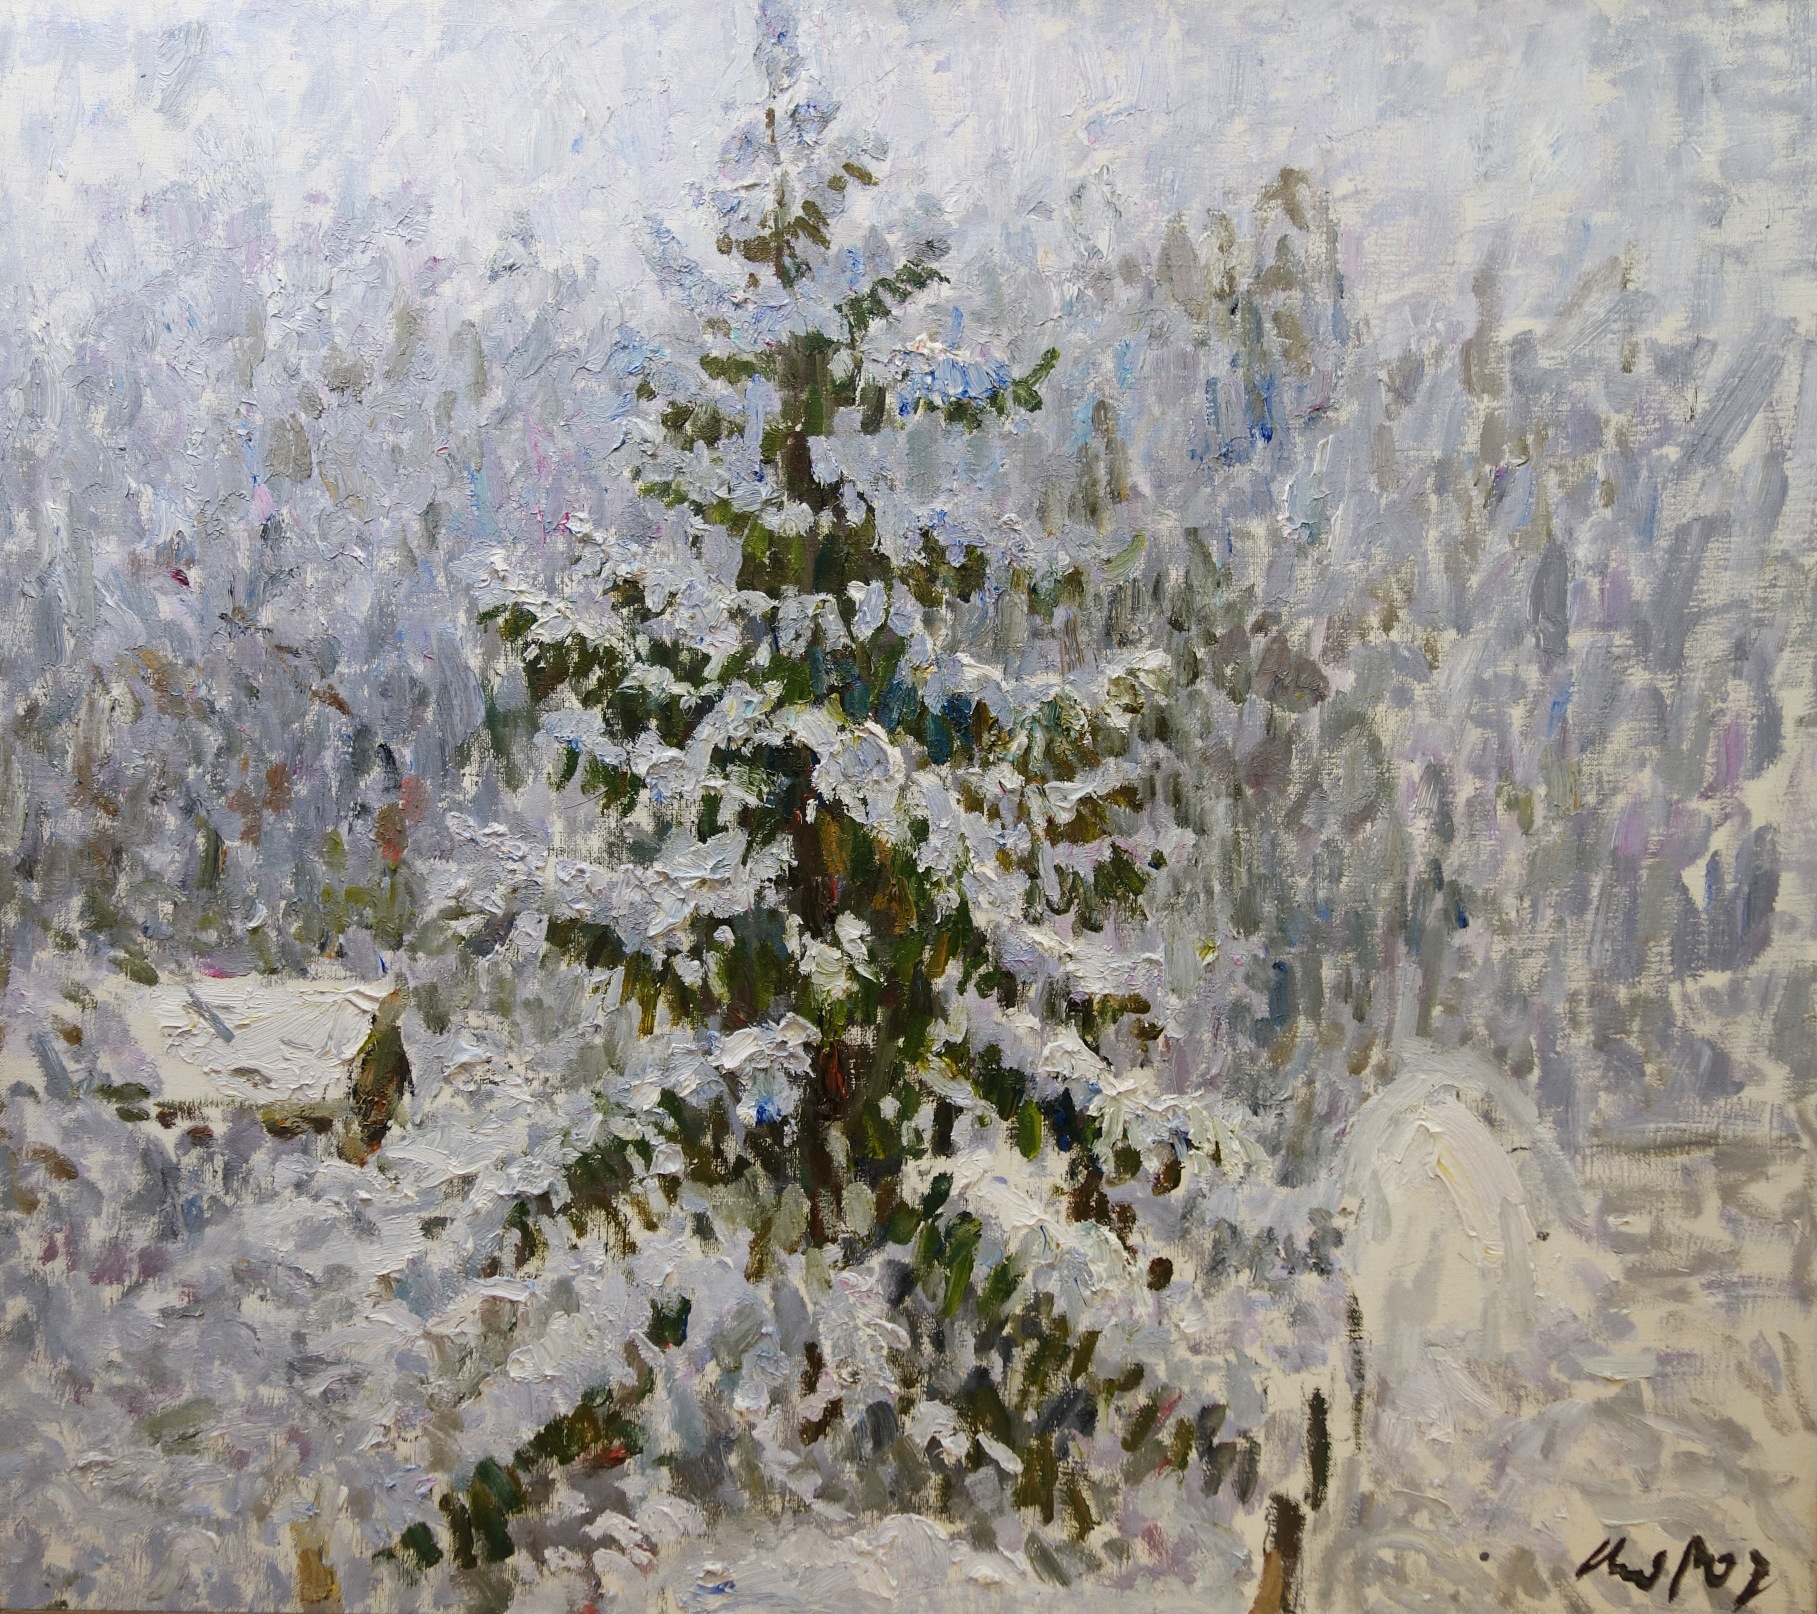 Moroz, pittura russa, post impressionismo russo, inverno, neve